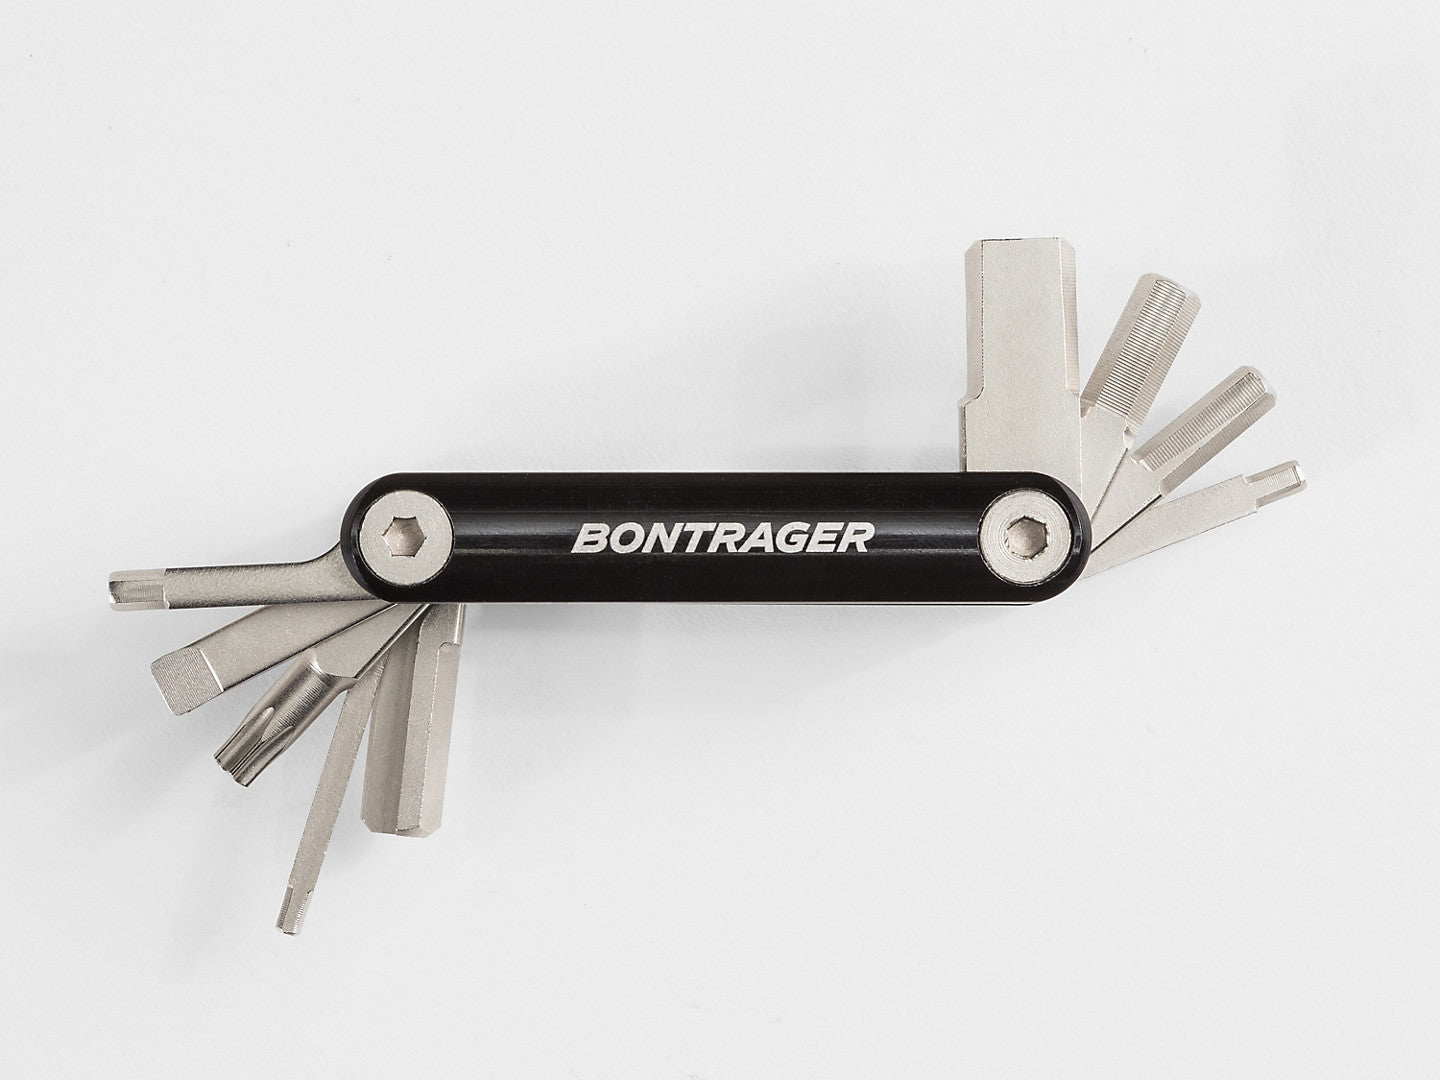 Bontrager BITS Multi Tool on white background